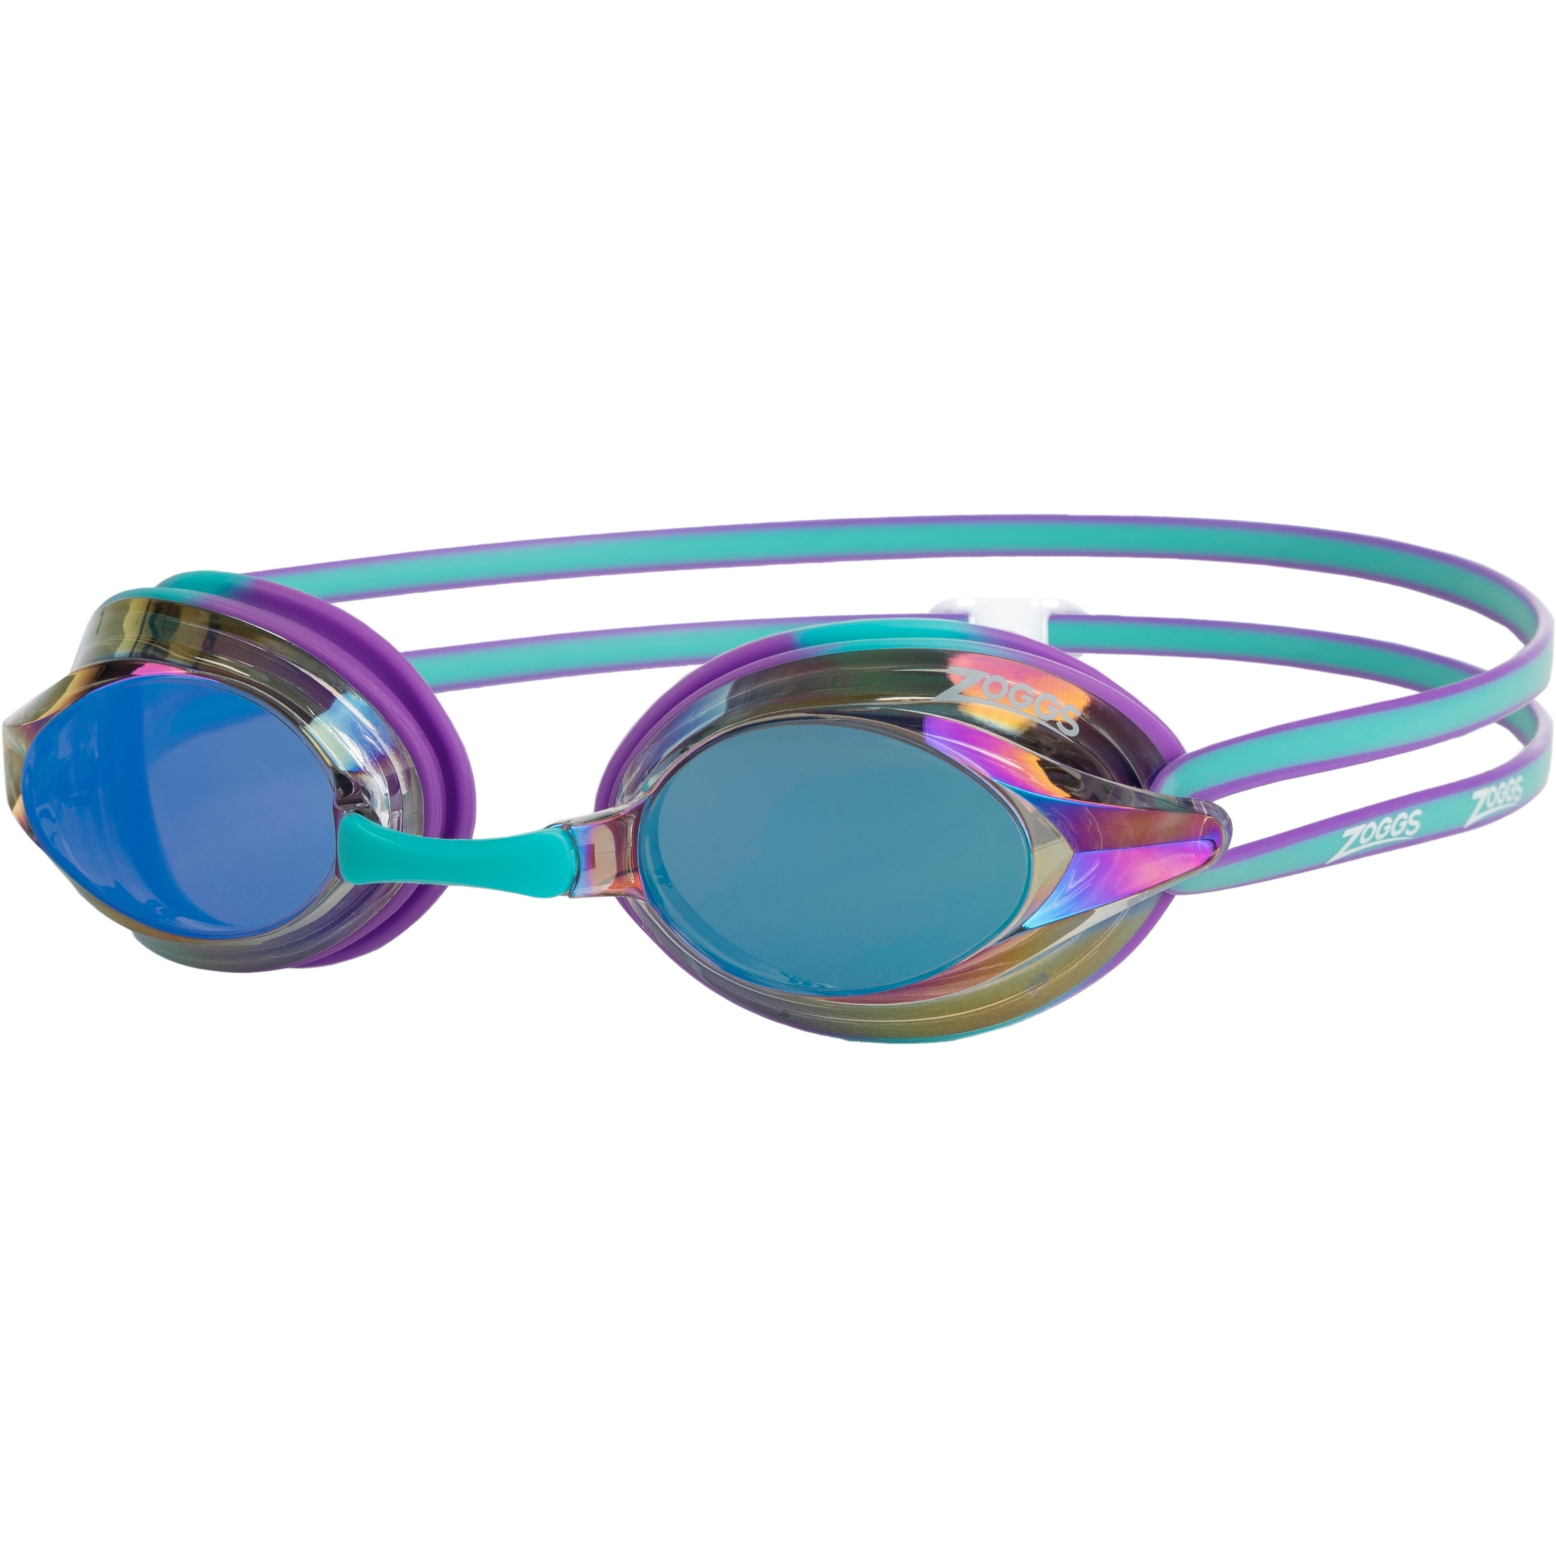 Produktbild von Zoggs Racer Titanium Schwimmbrille - Mirror Blue Lenses - Violet/Turqoise